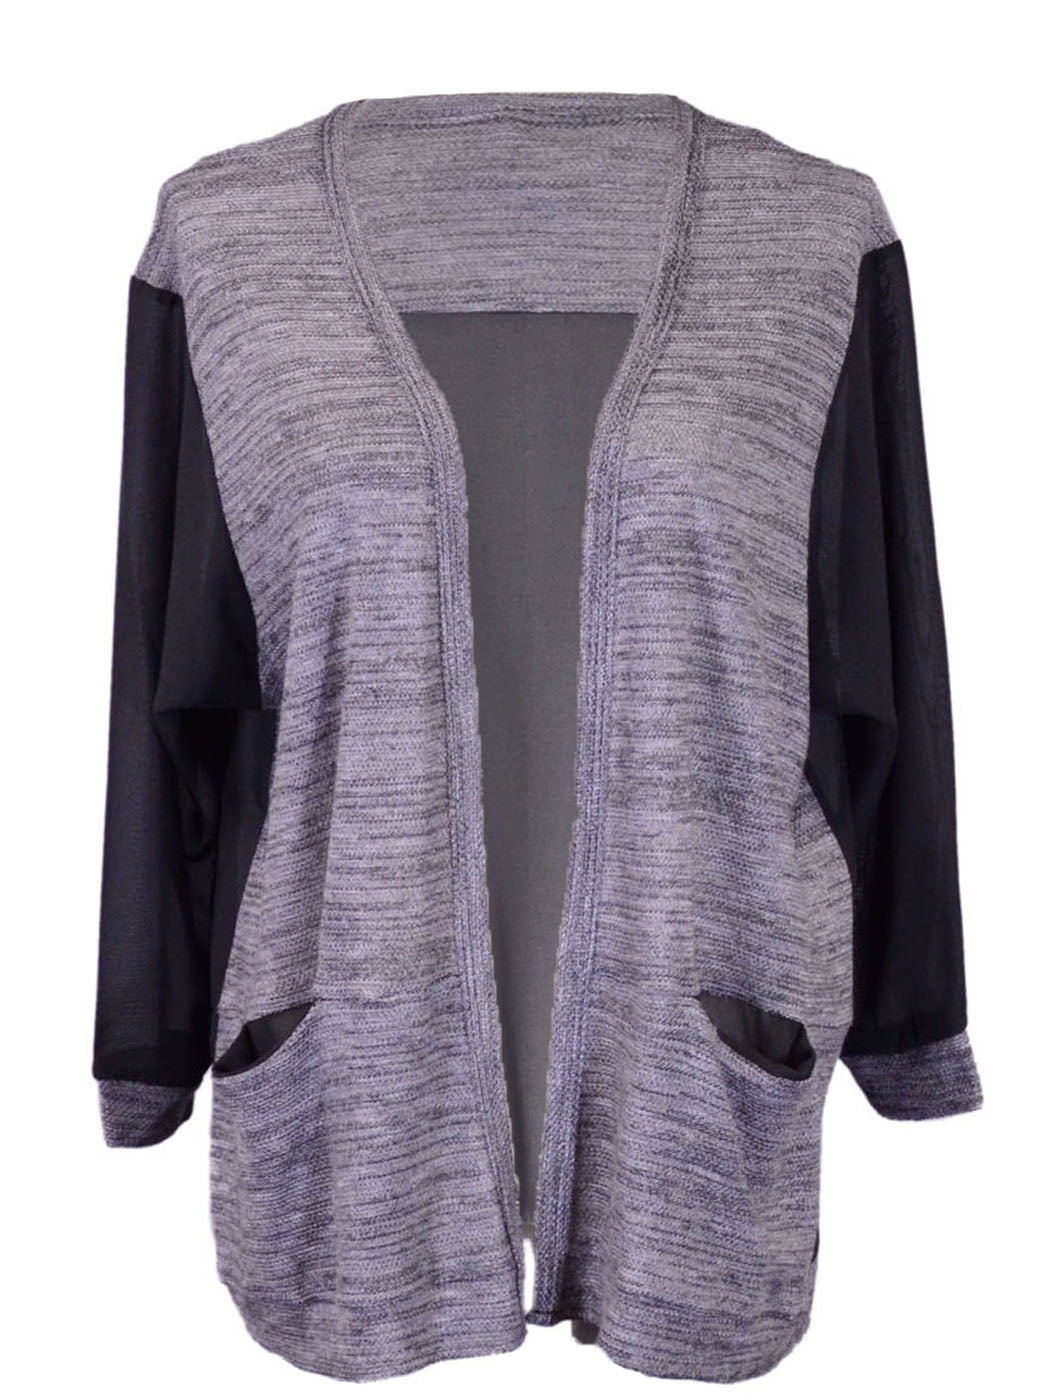 Millibon Comfortable Contrast Fabric Open Front Long Sleeve Cardigan Top - ALILANG.COM